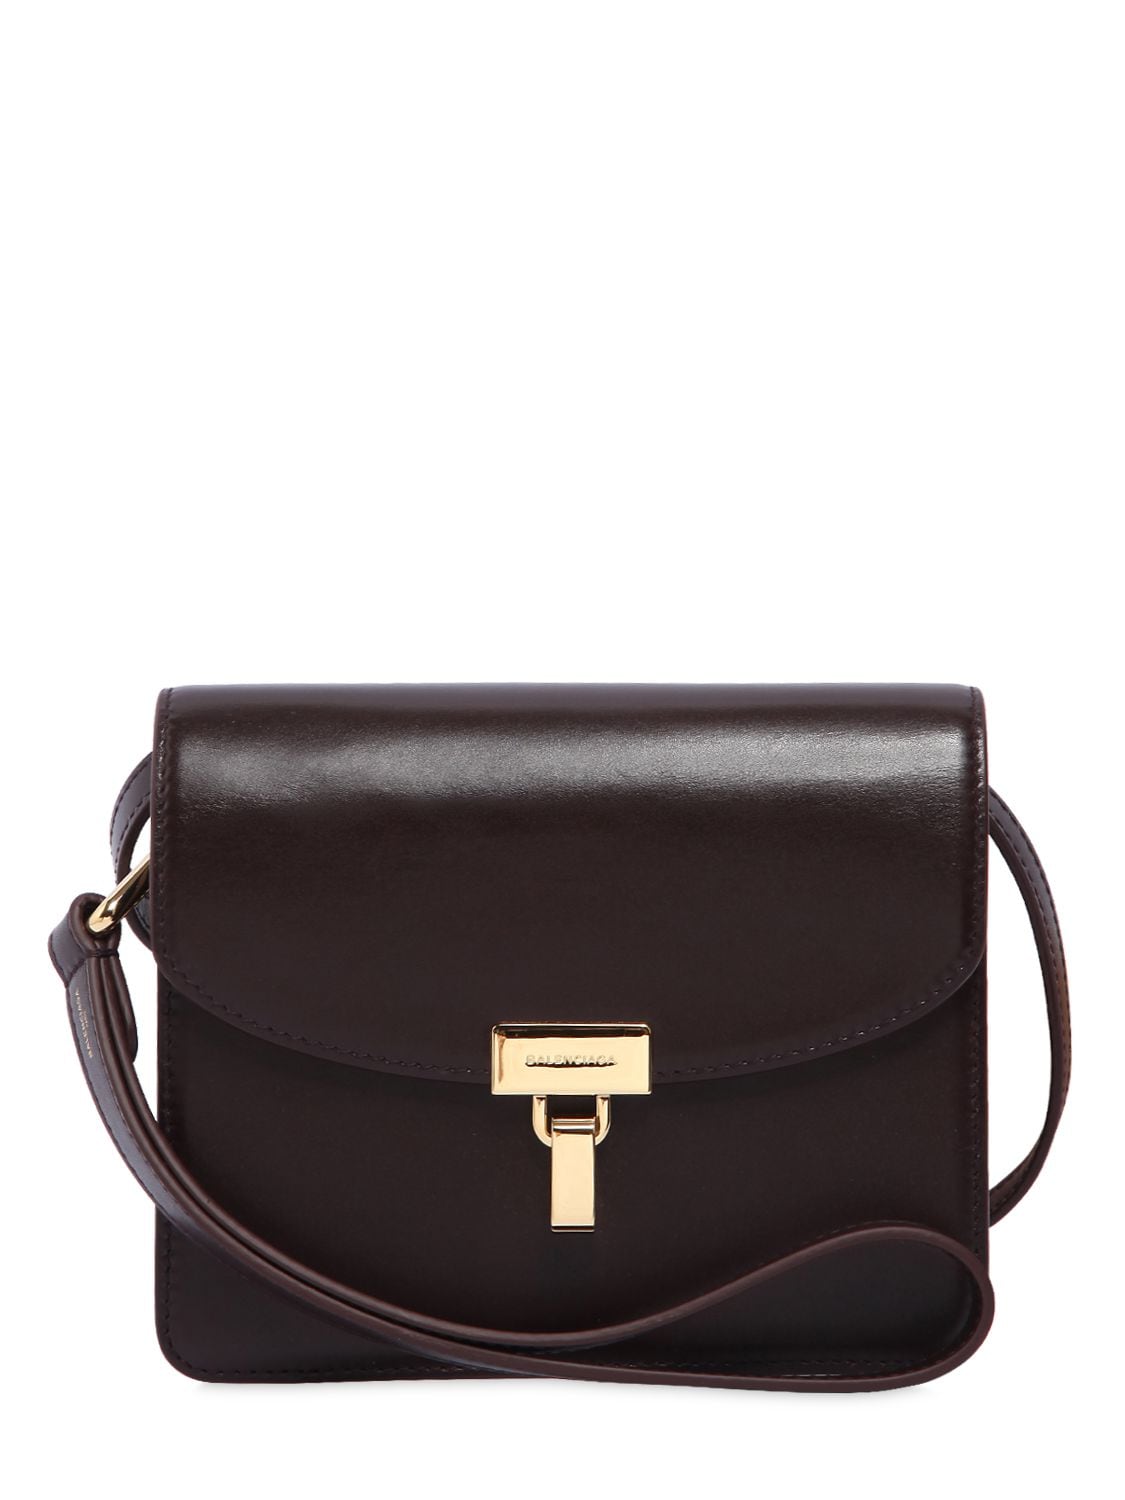 Balenciaga Lock Leather Shoulder Bag In Brown